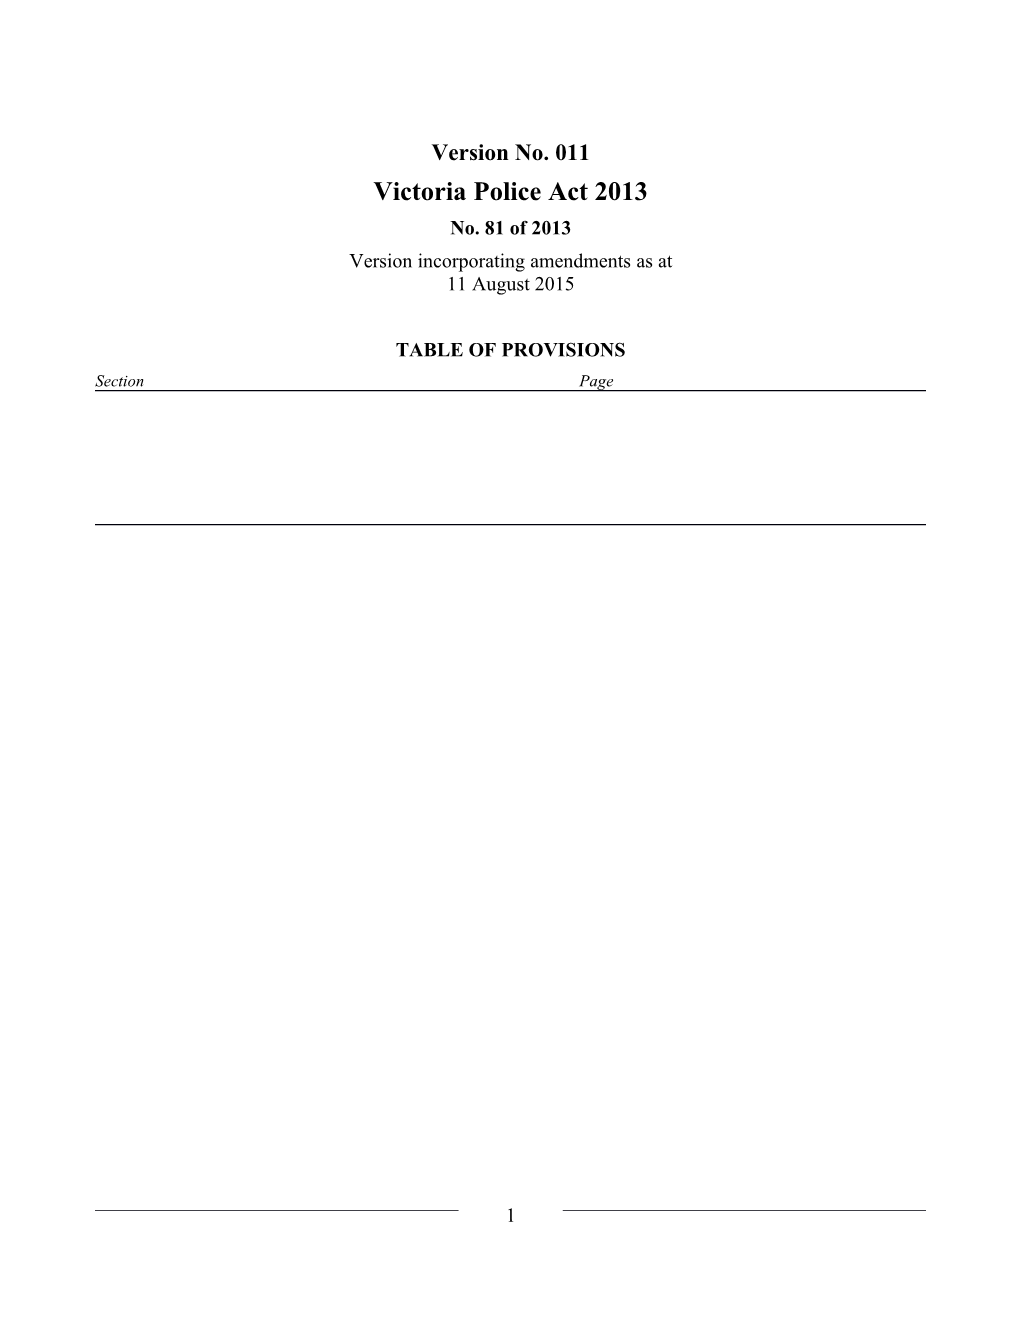 Victoria Police Act 2013